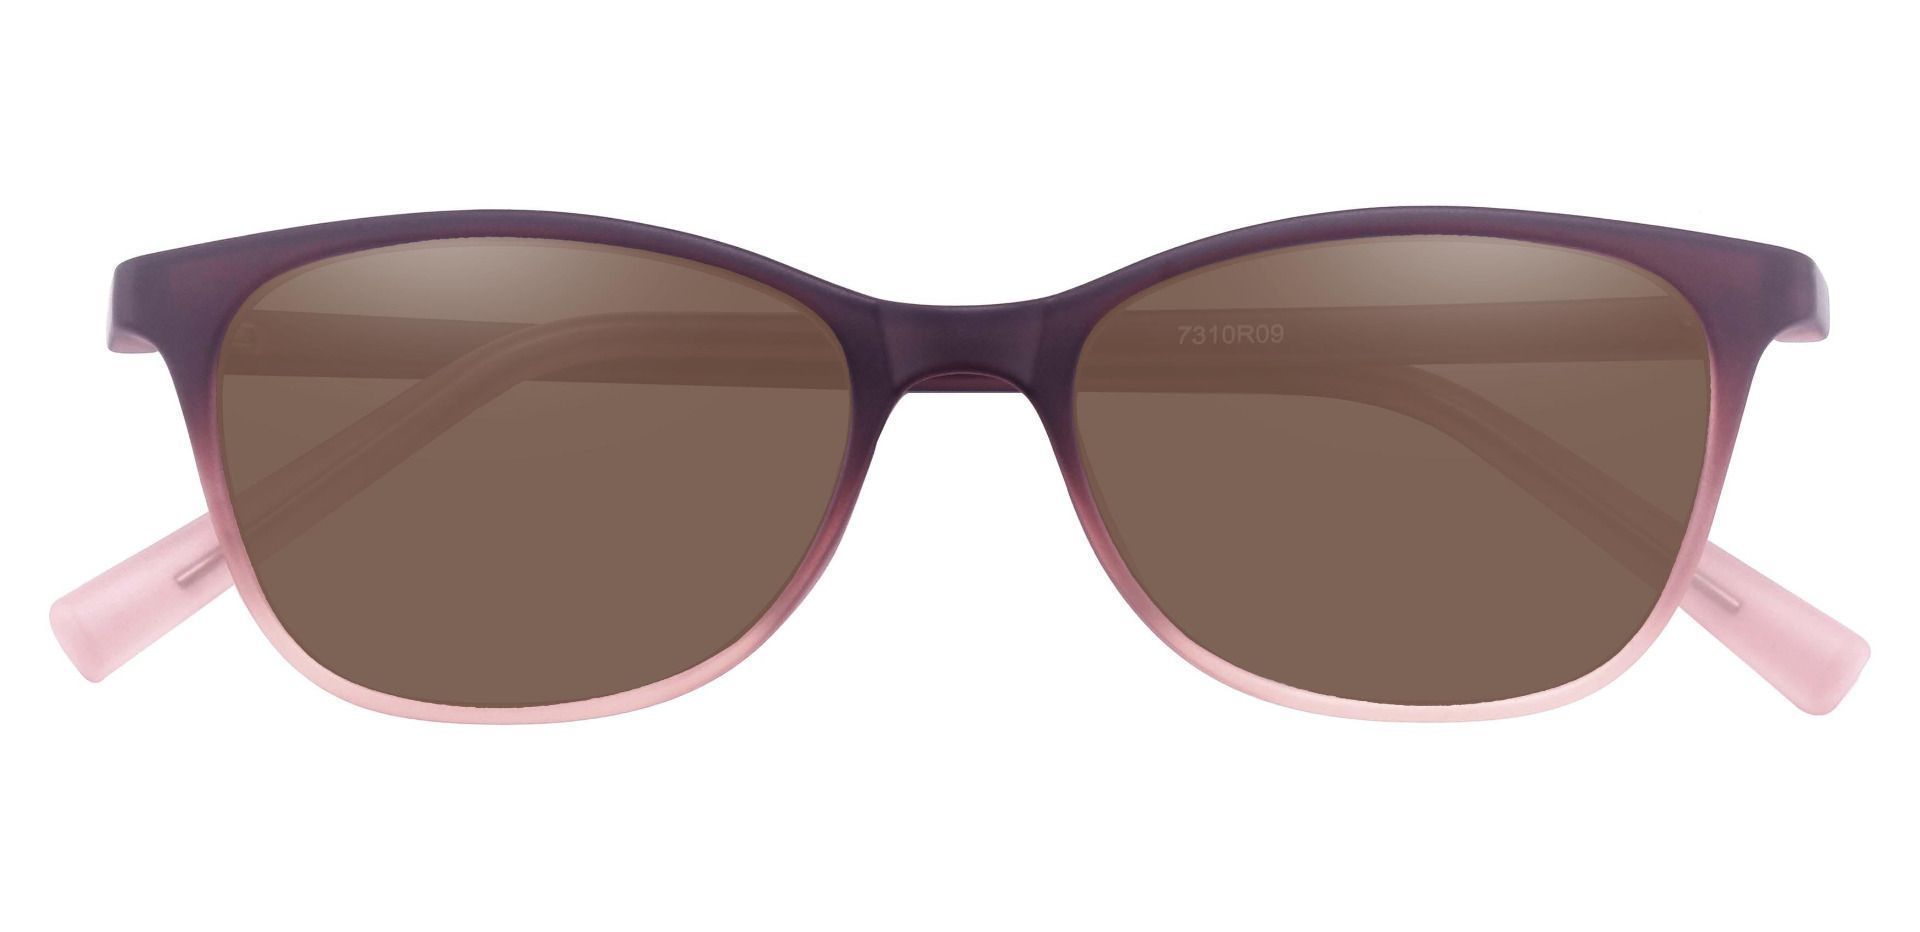 Sasha Classic Square Prescription Sunglasses - Red Frame With Brown Lenses